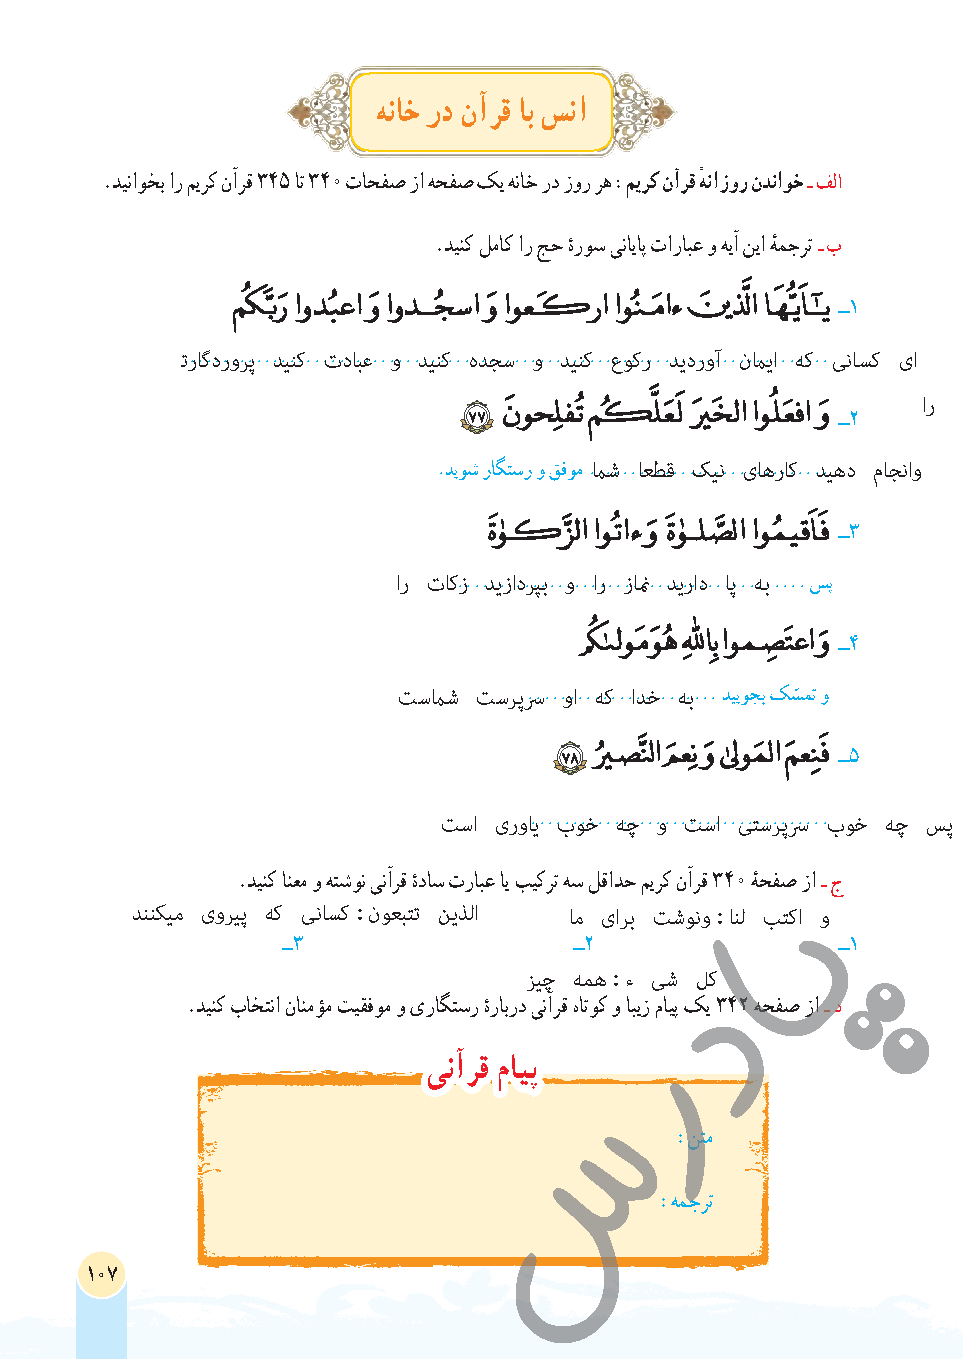 جواب فعالیت سوم درس 12 قرآن هفتم - جلسه اول